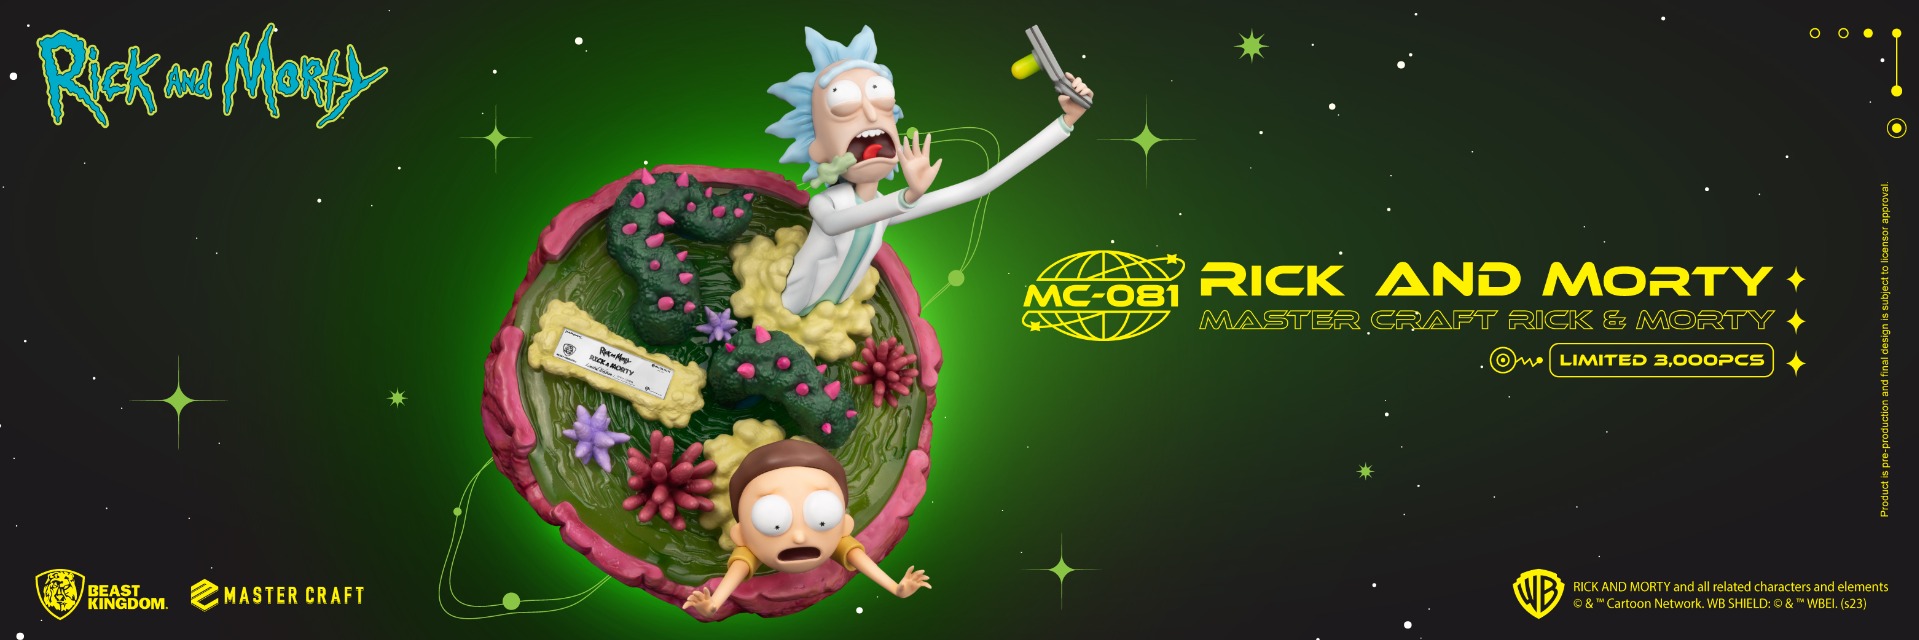 MC-081 Rick and Morty Master Craft Rick & Morty